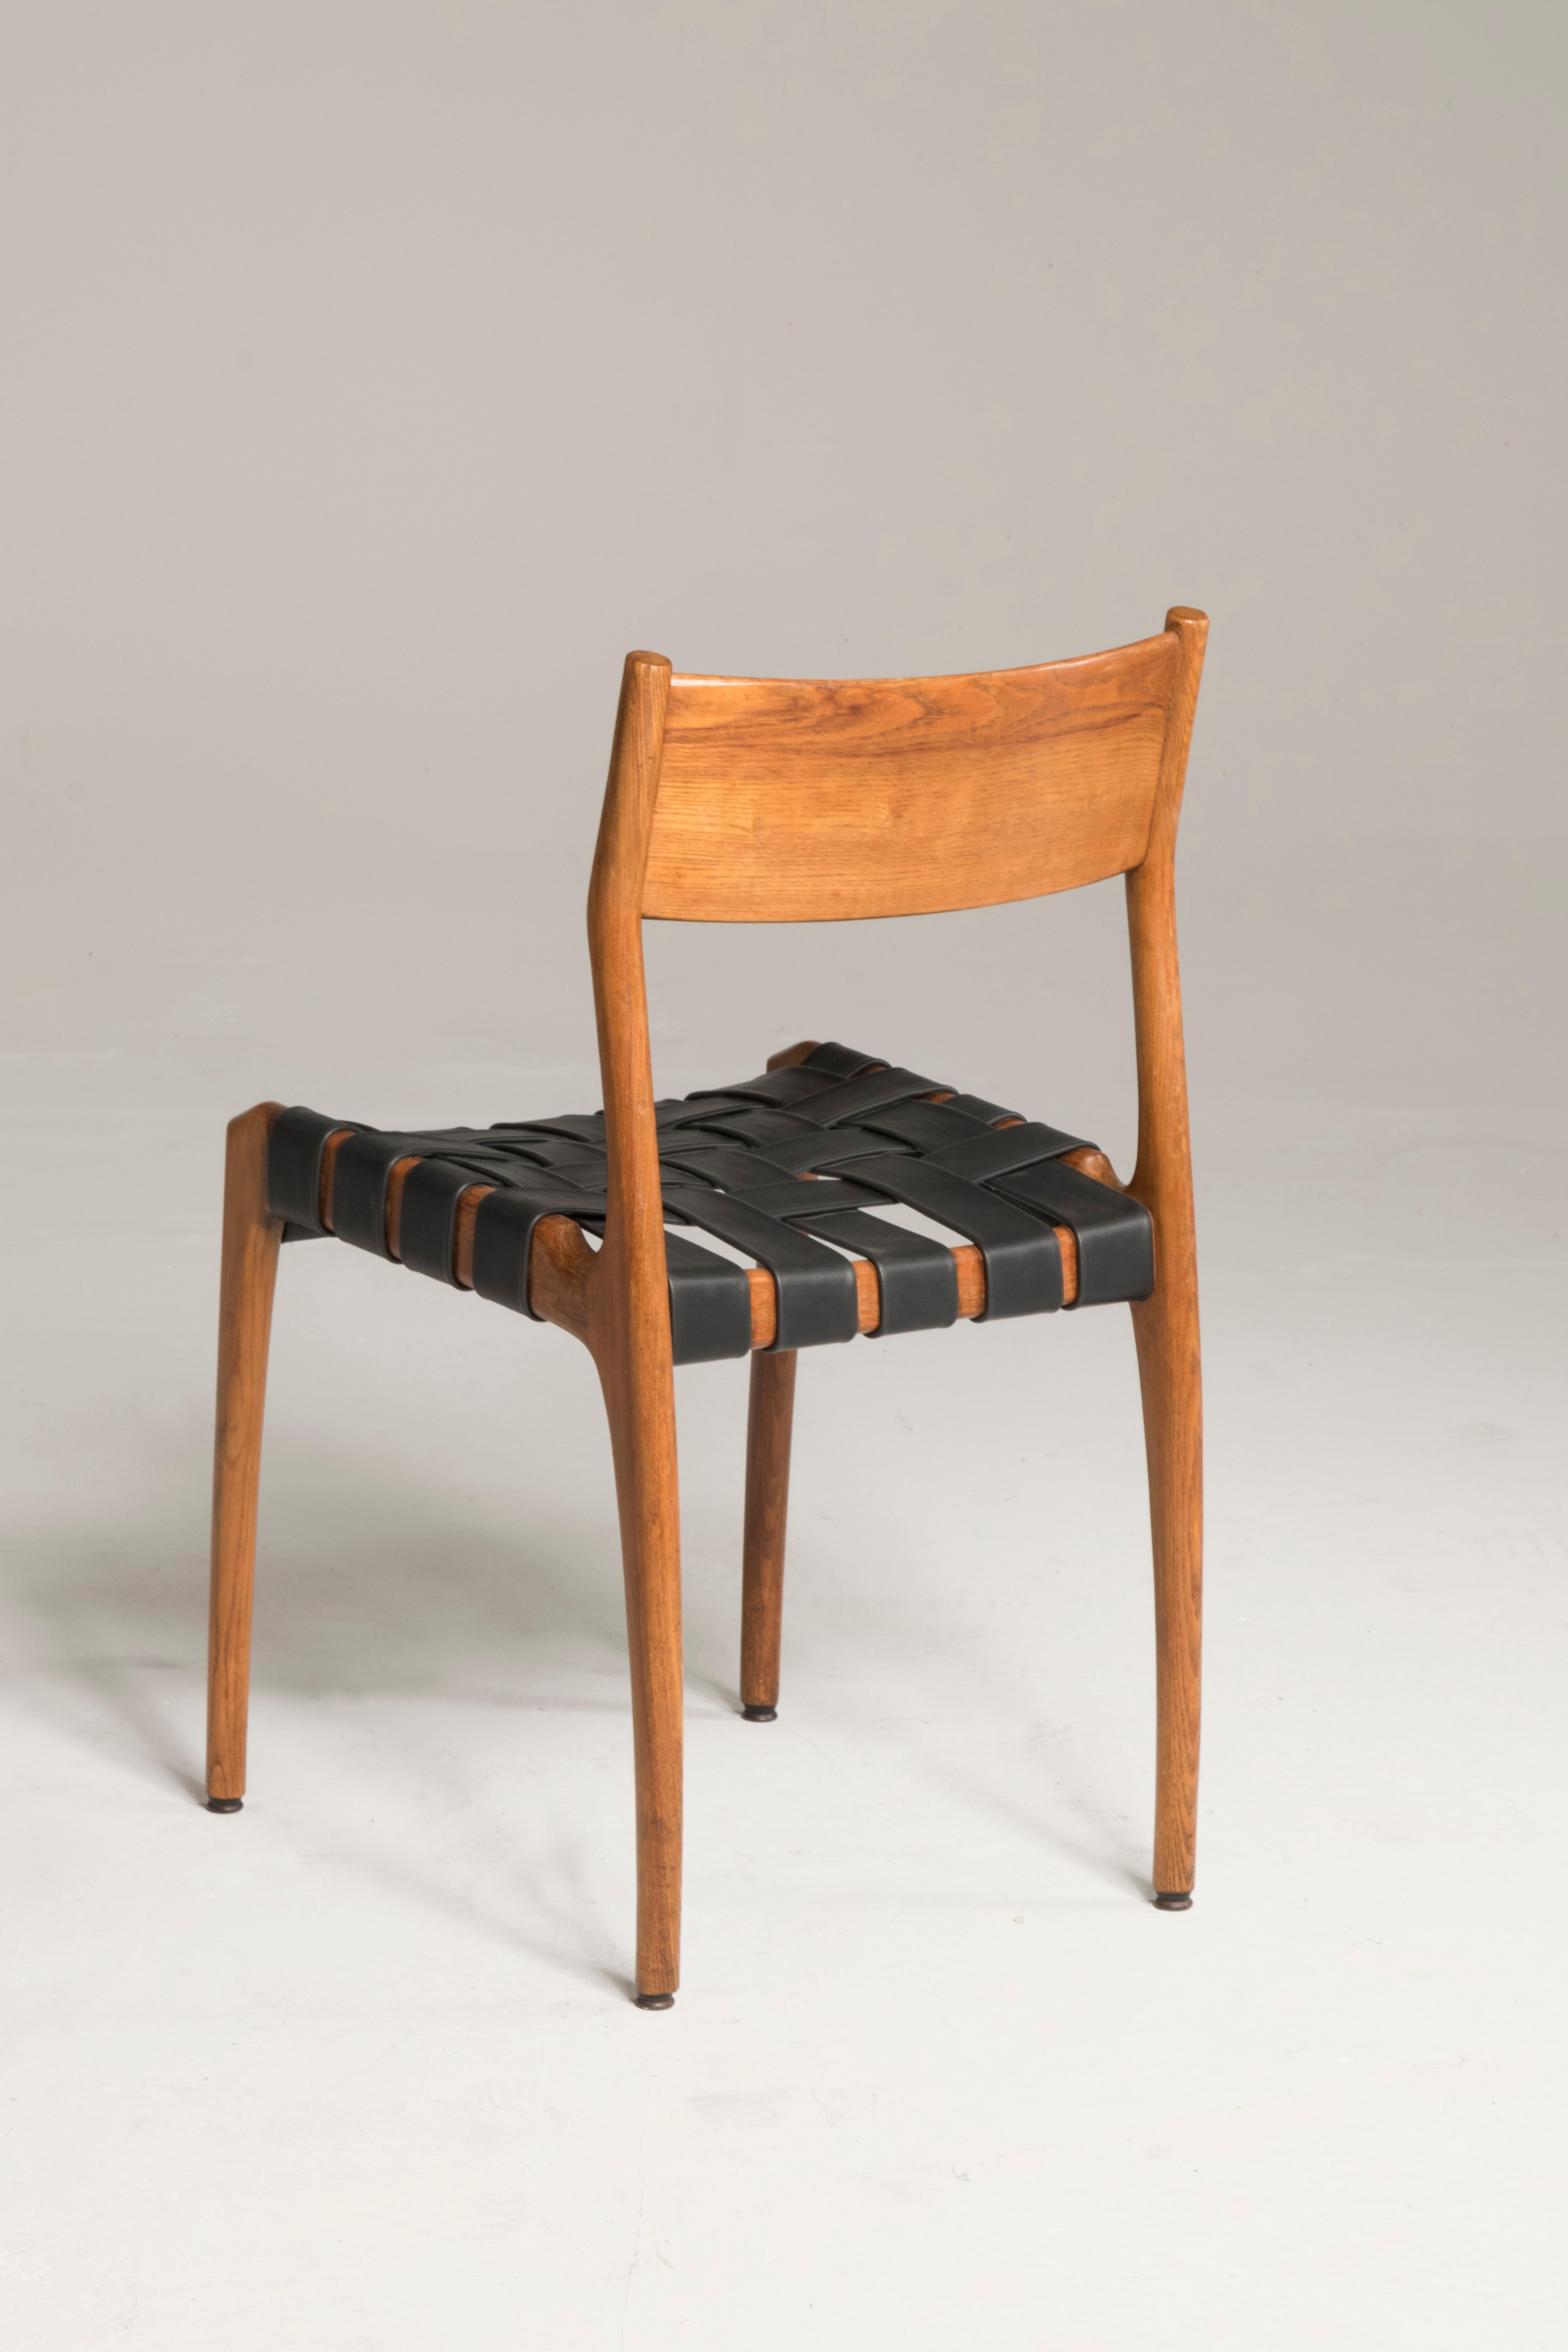 Italian Model 993 for Tipi Studio Six Woven Leather Teak Chairs